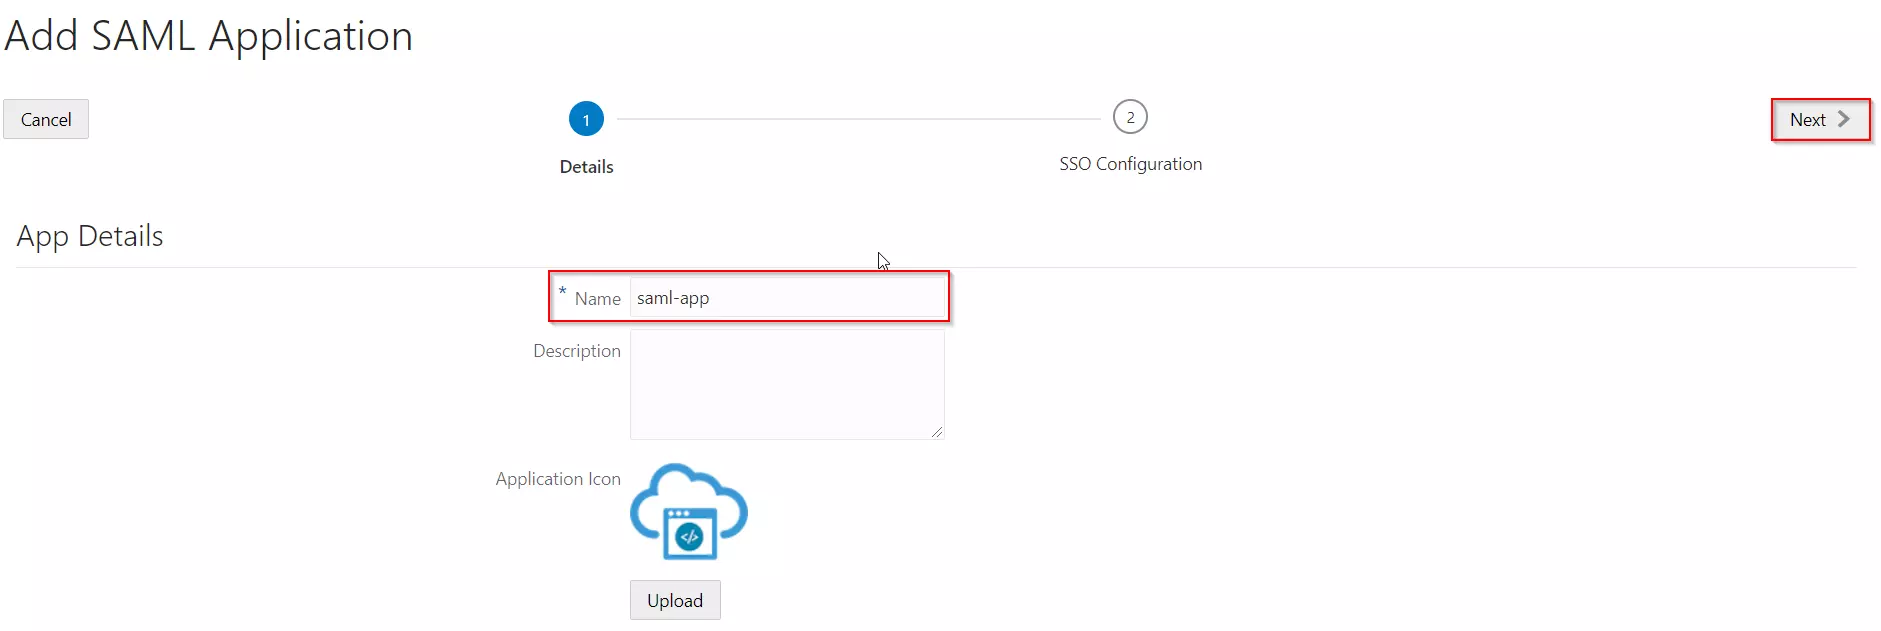 SAML Single Sign On (SSO) using Oracle Identity Cloud Service), Configure App